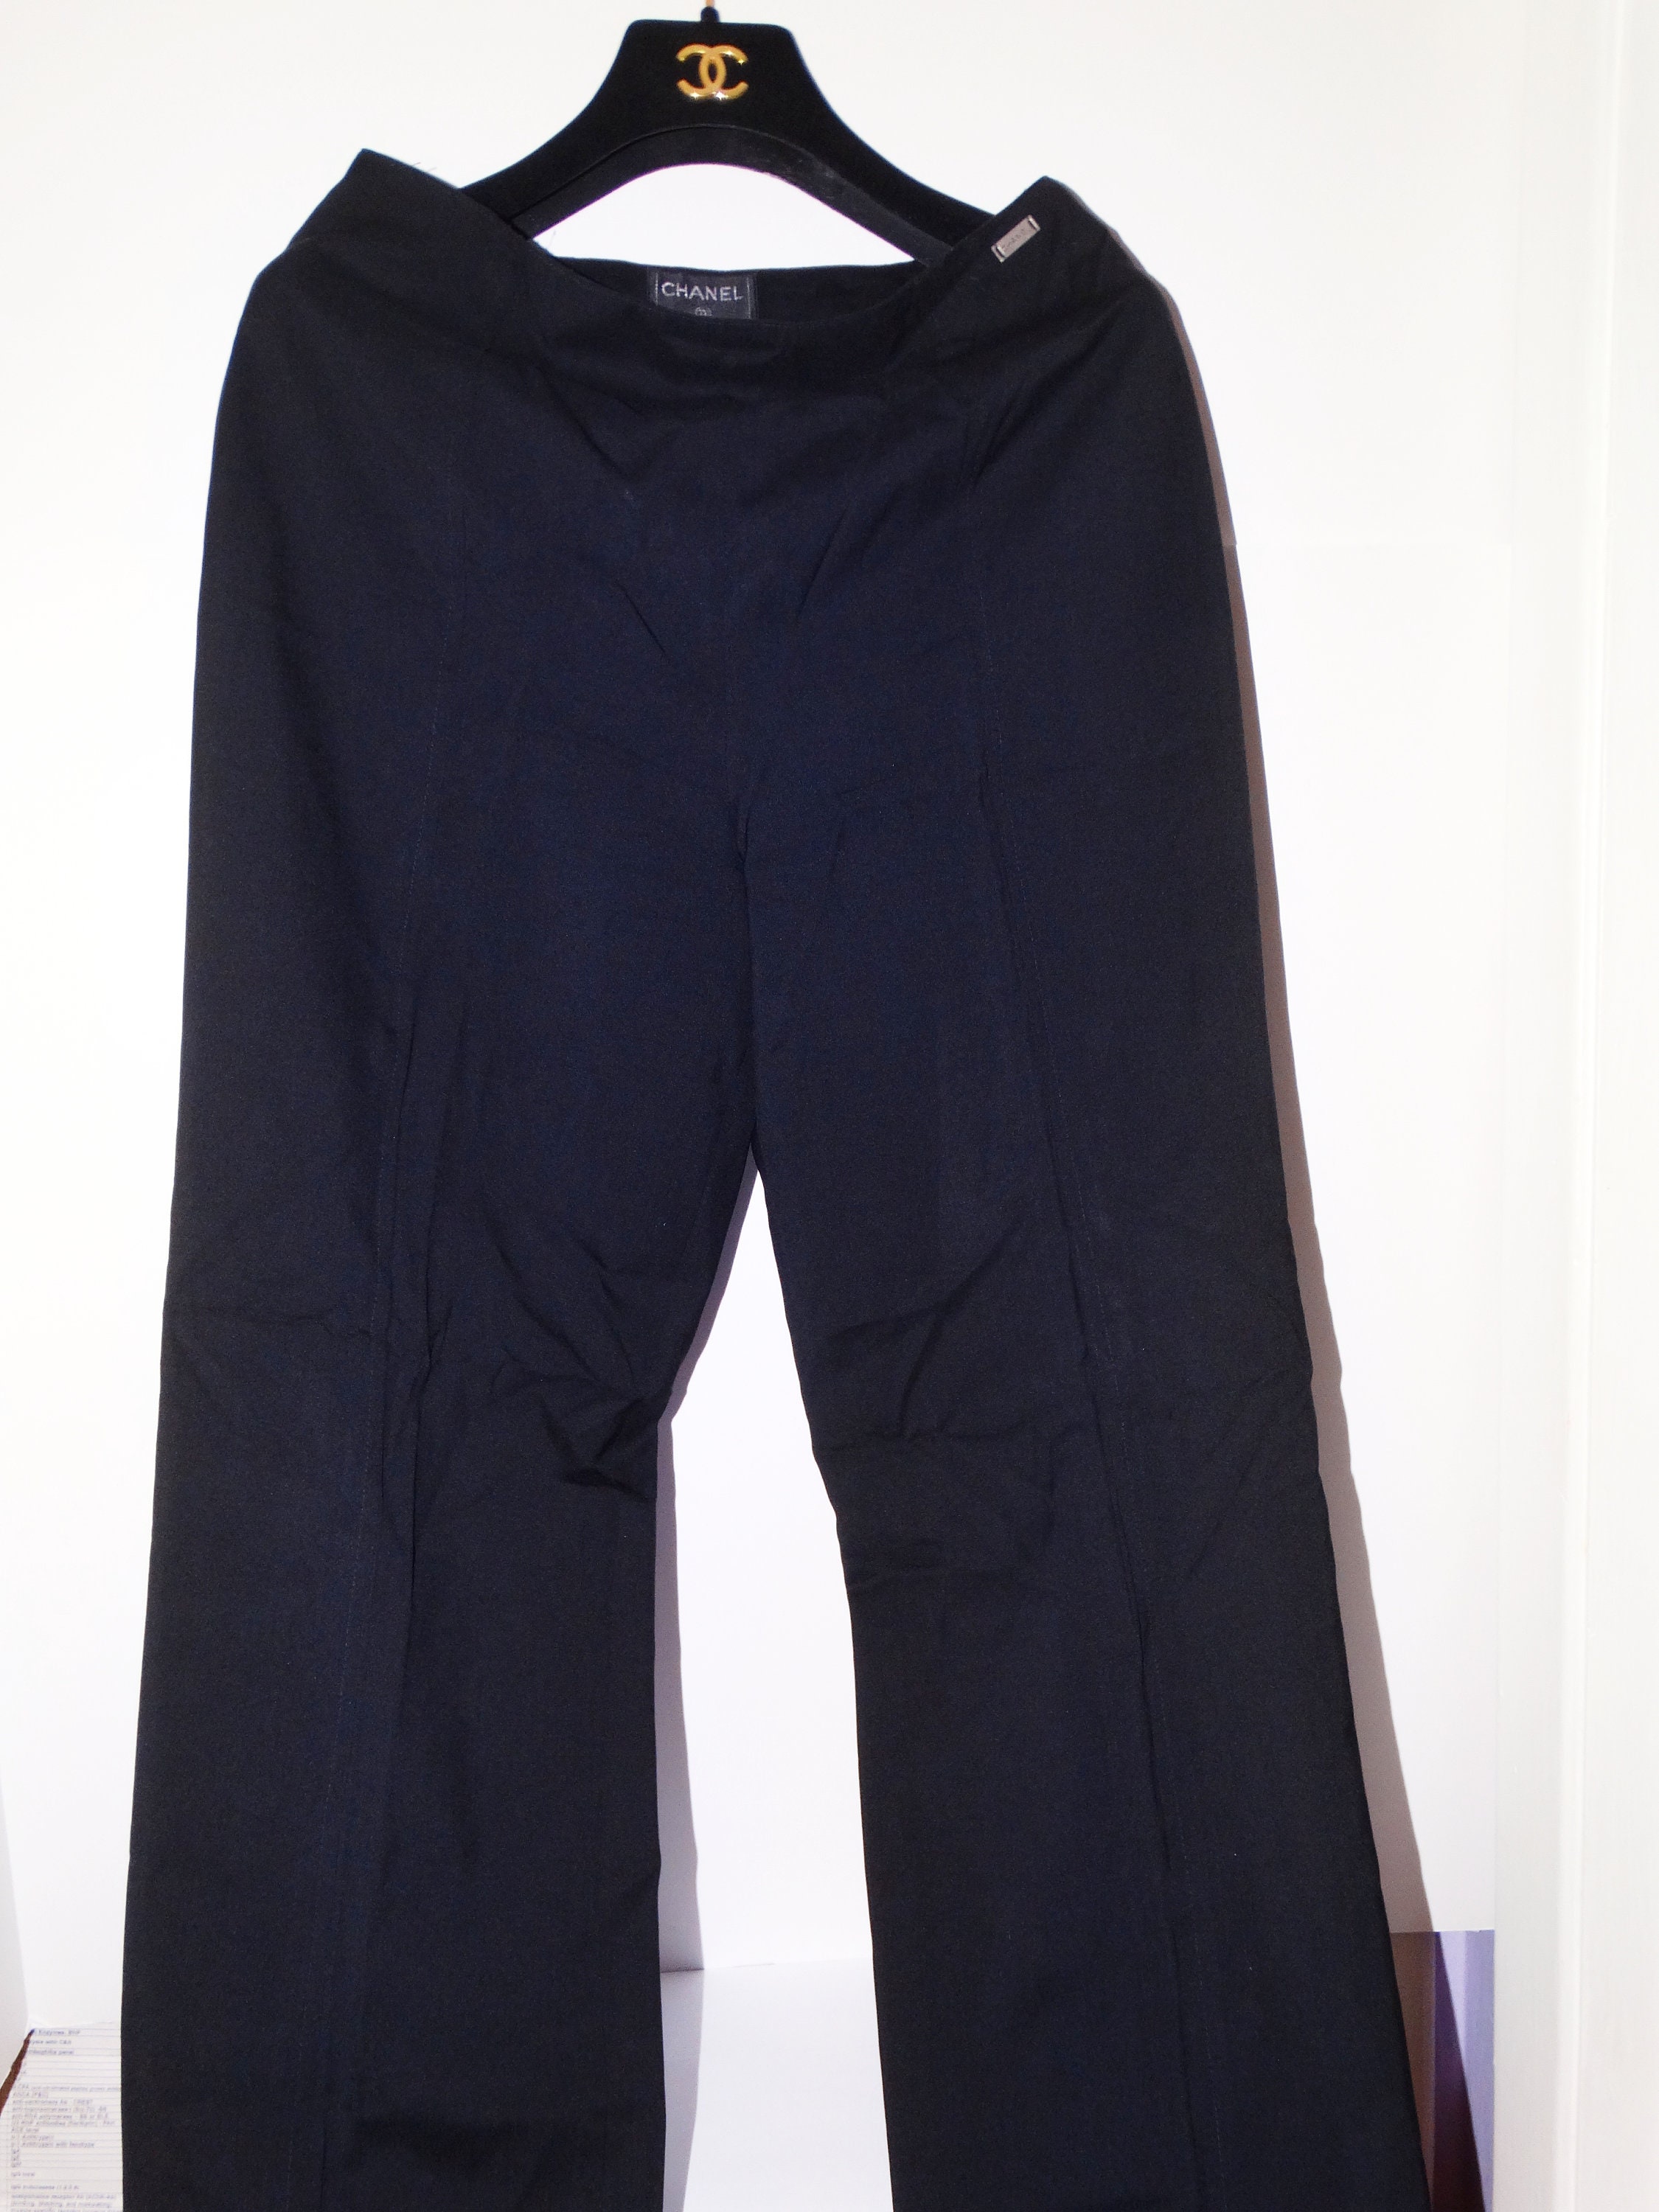 vintage chanel black dress pants